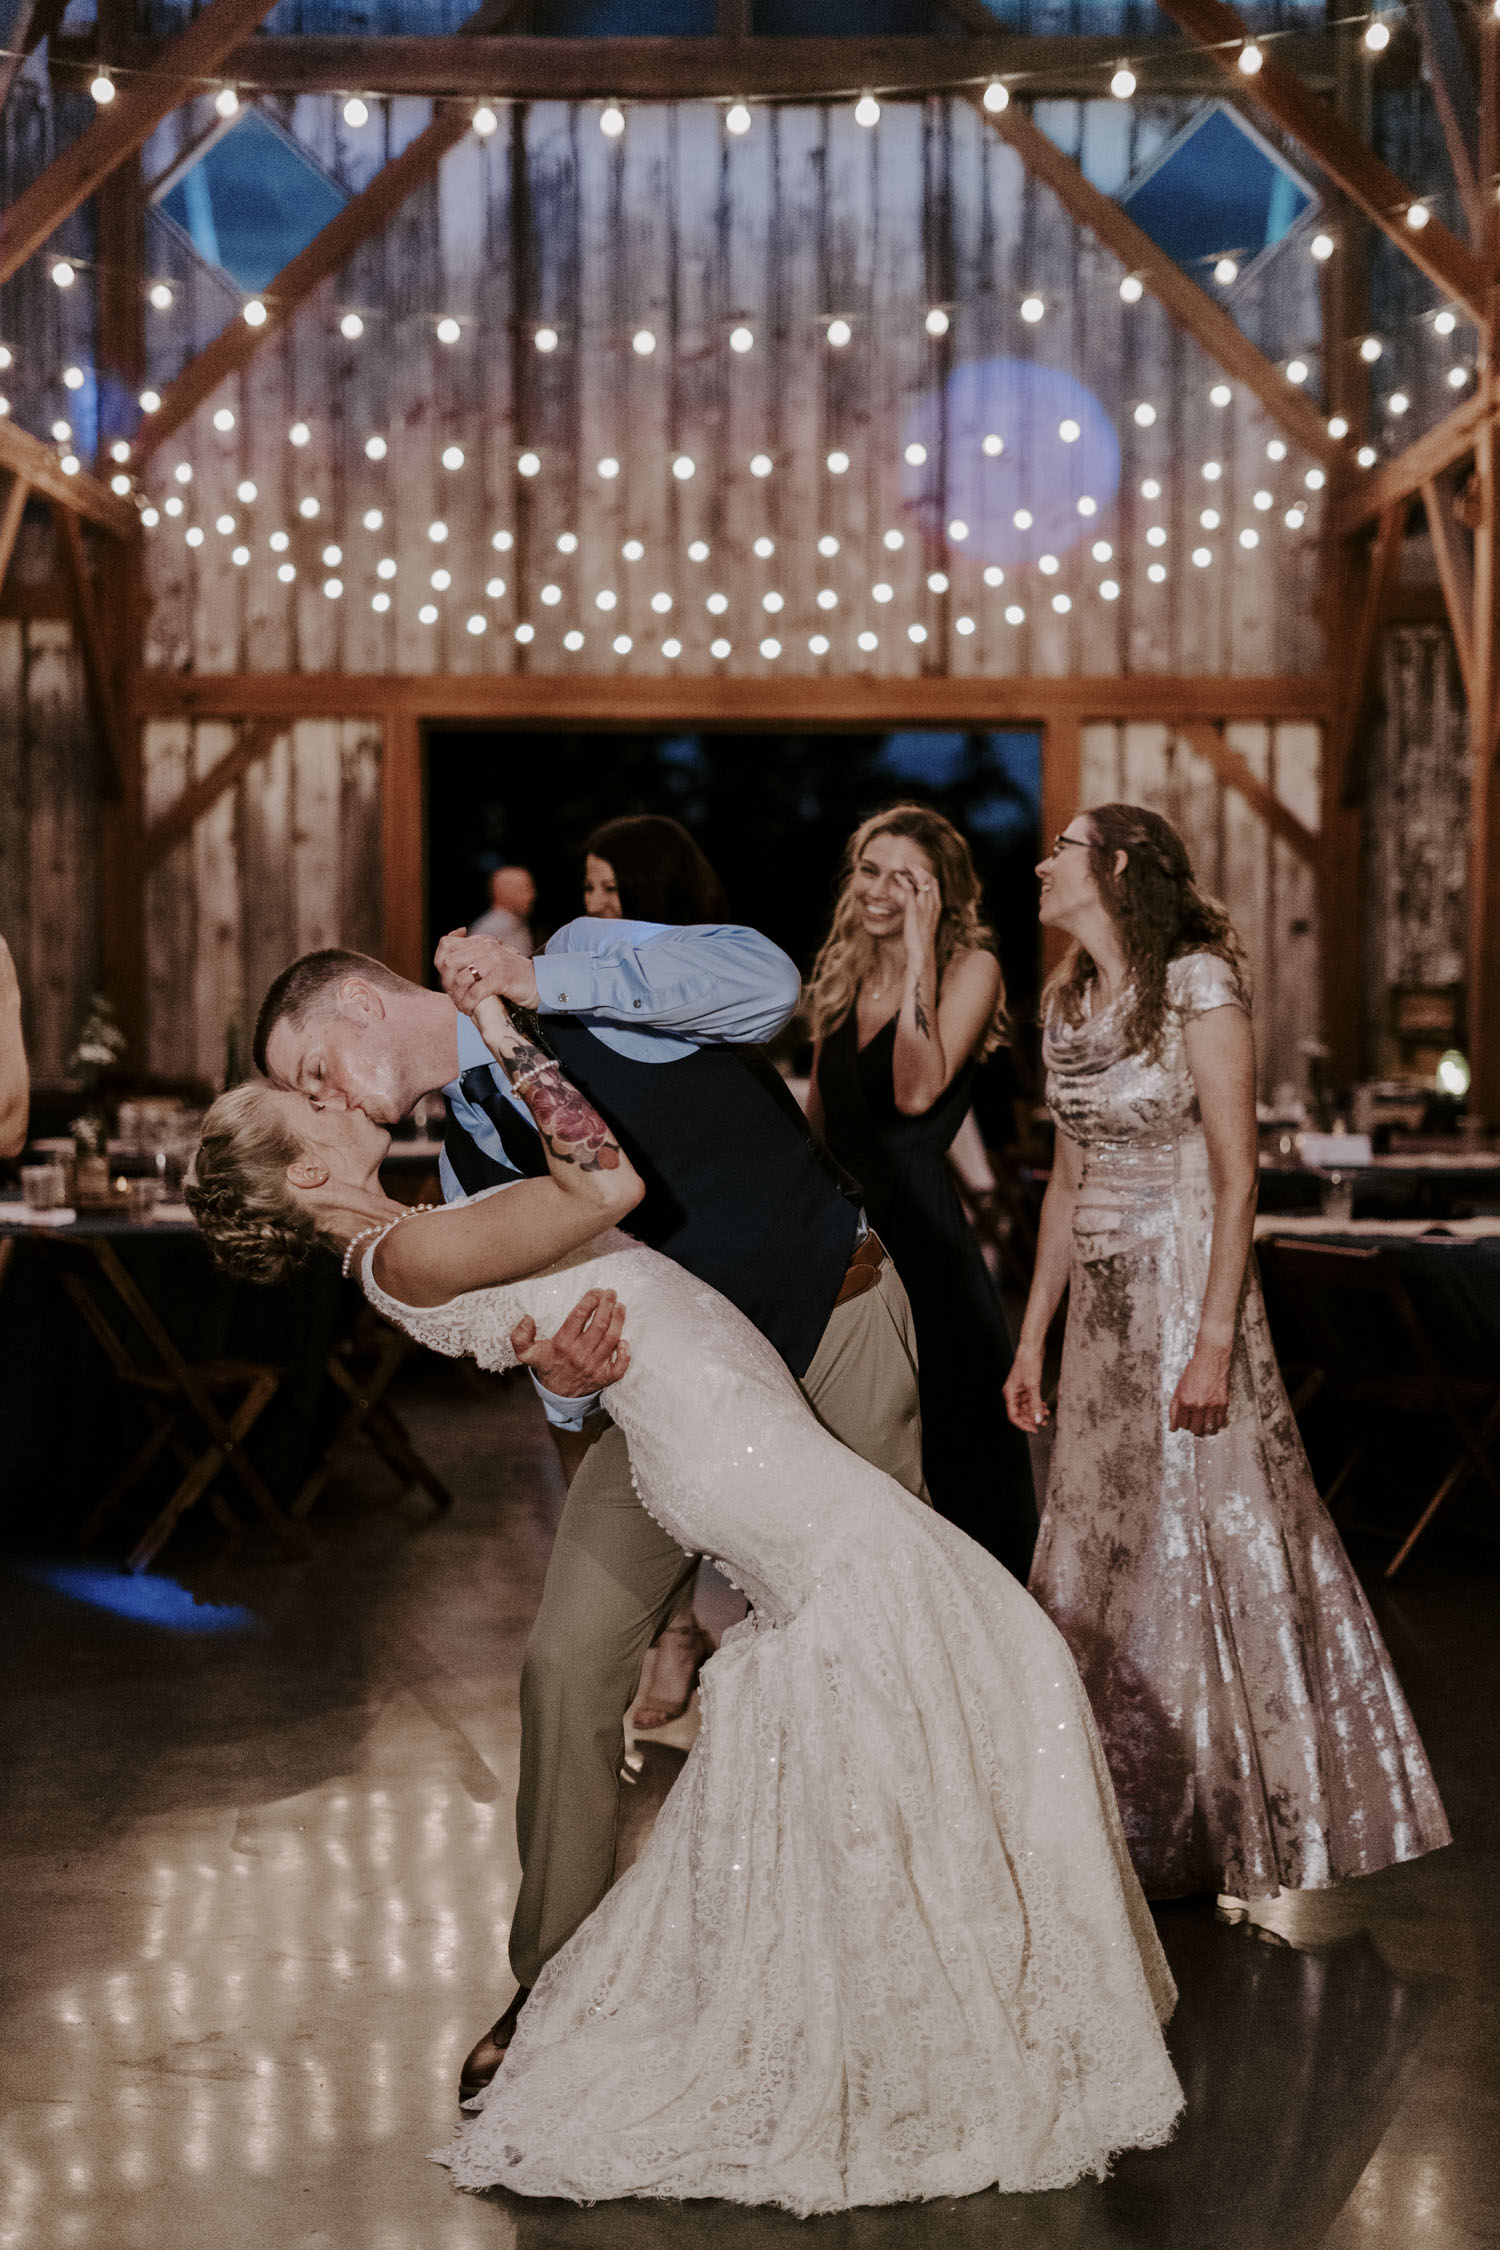 Schwinn Produce Farm Wedding in Leavenworth - Lenexa - Lawrence, Kansas by Destination Wedding & Elopement Photographer | Kayli LaFon Photography